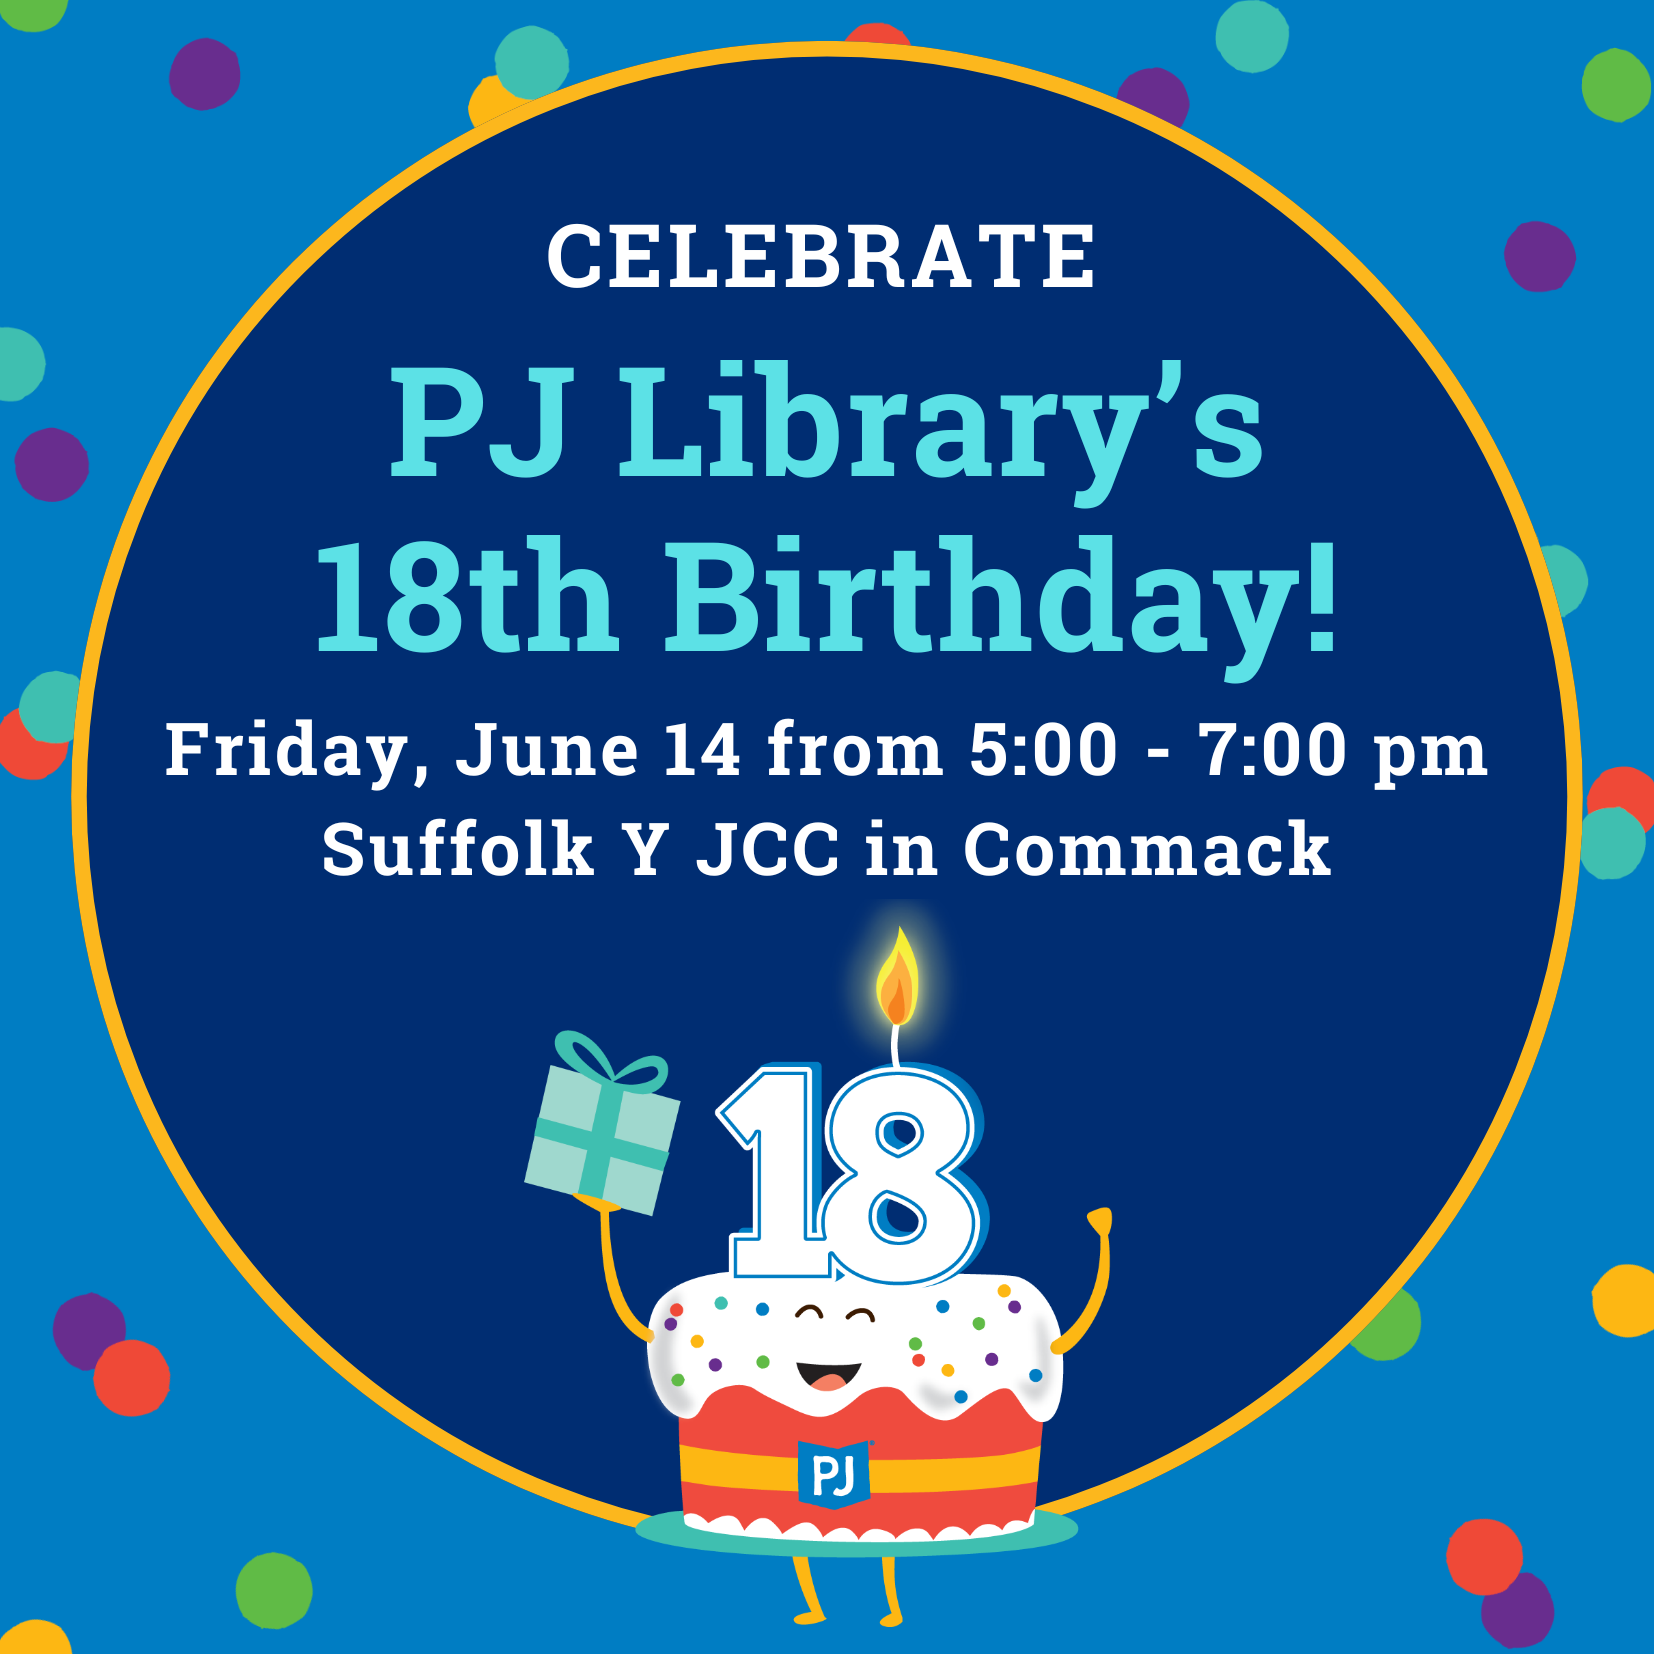 PJ Library in New York 18th Birthday Celebrations: Suffolk County